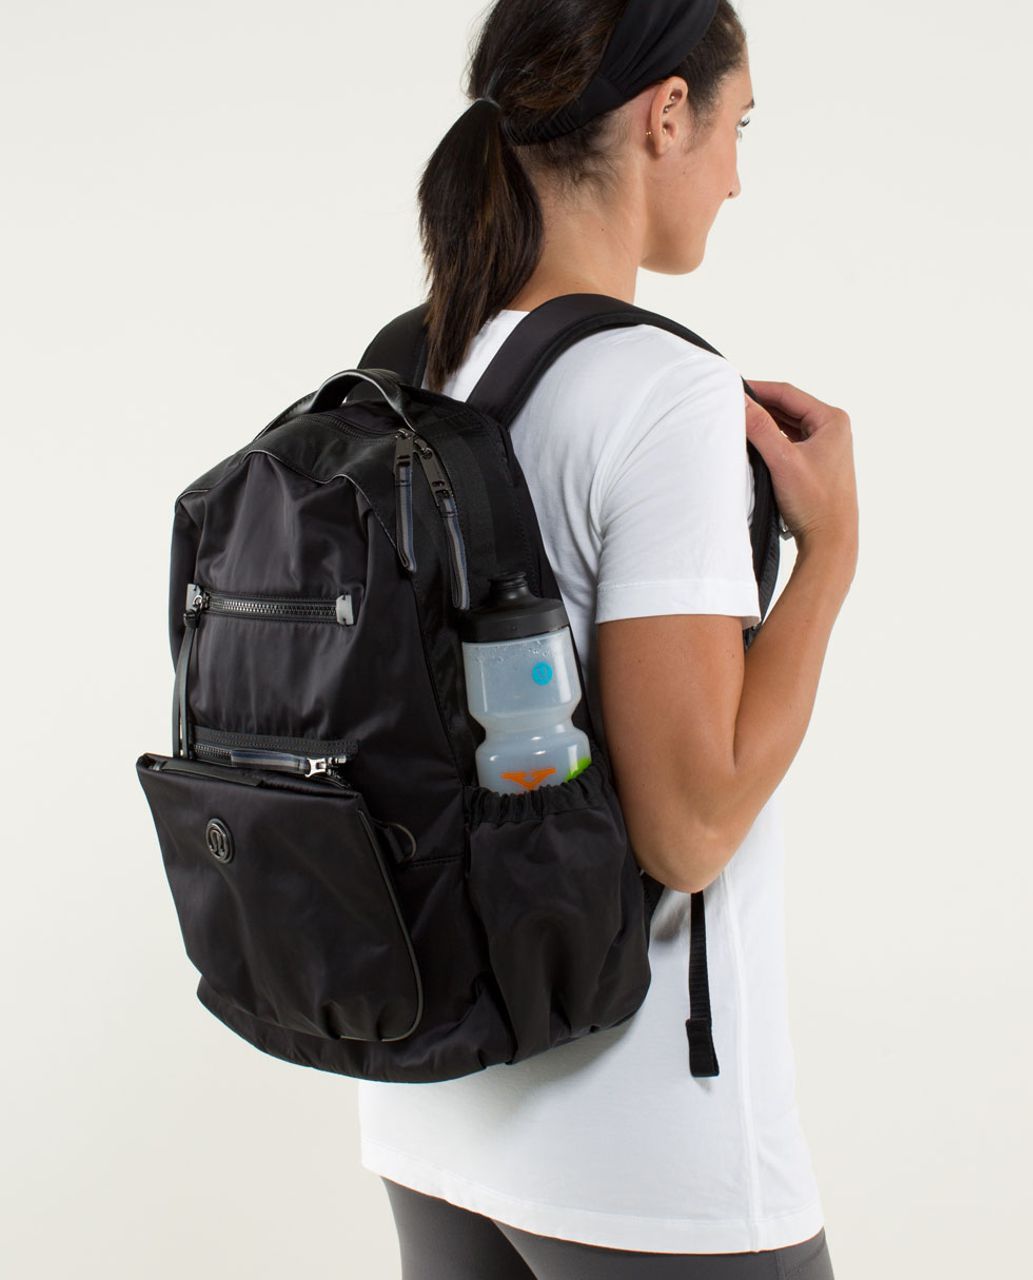 Lululemon Back To Class Backpack - Black